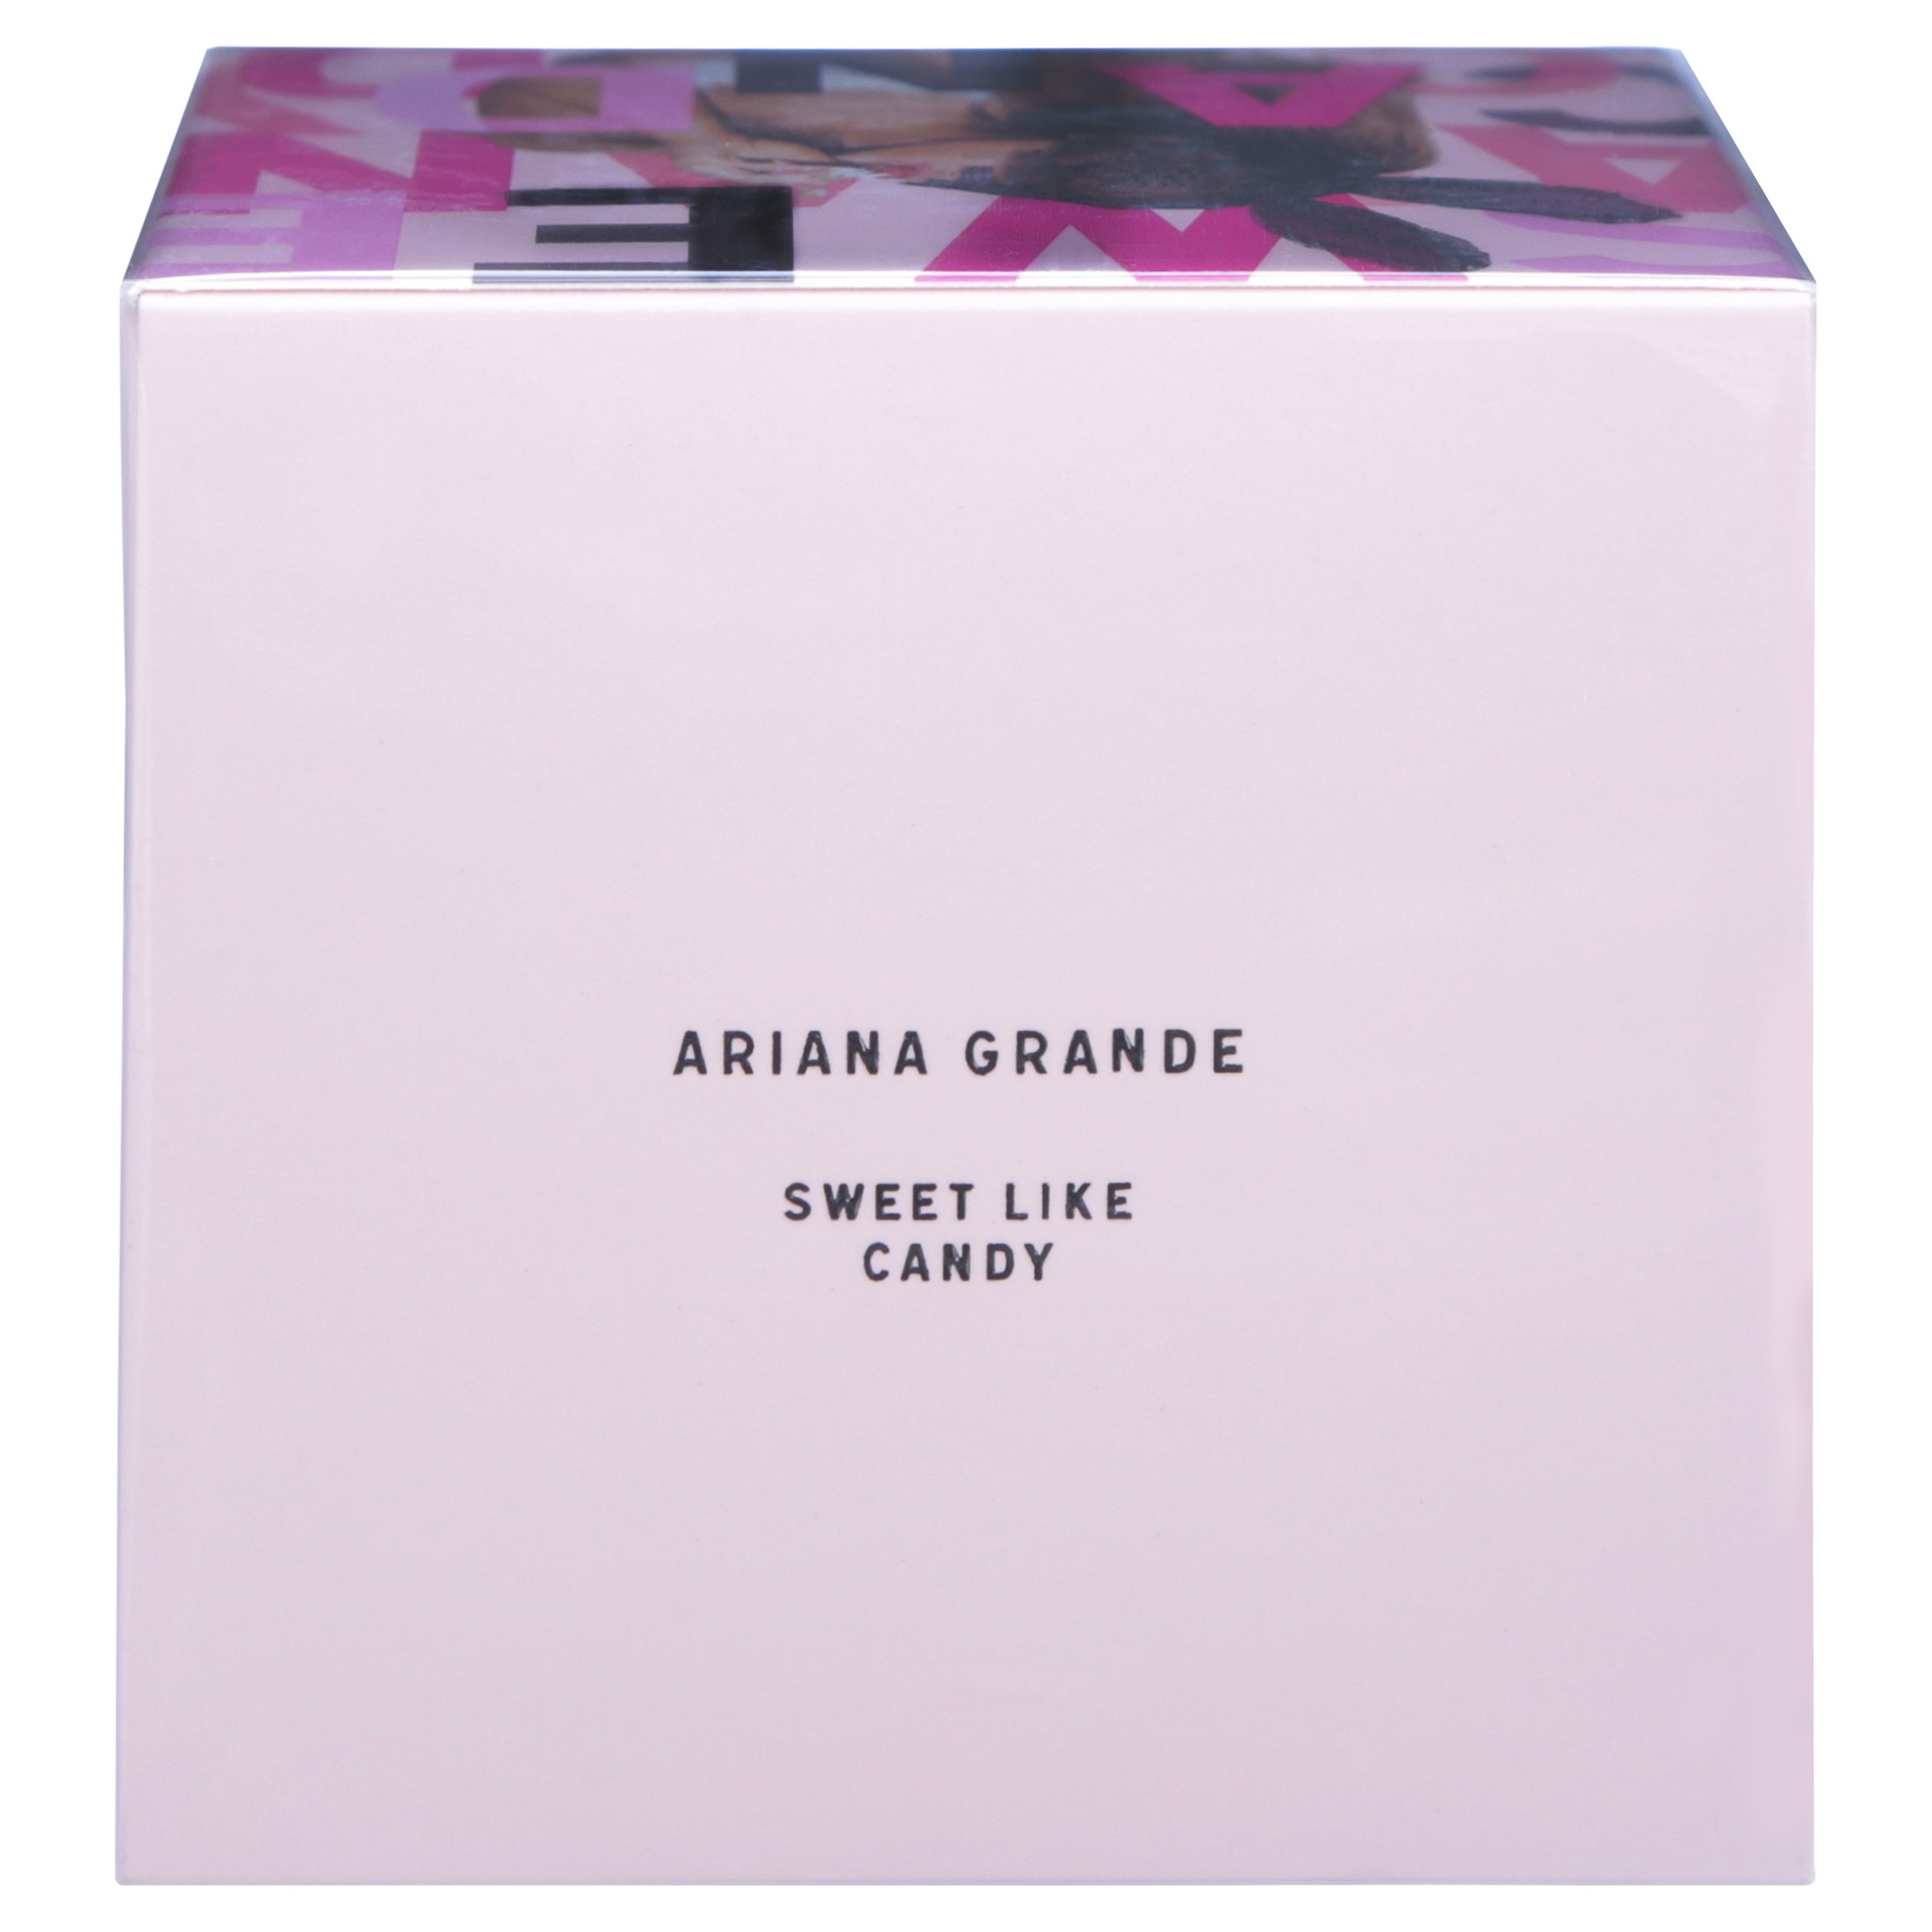 Ariana Grande Sweet Like Candy Eau de Parfum, Perfume for Women, 1 Oz - image 3 of 8